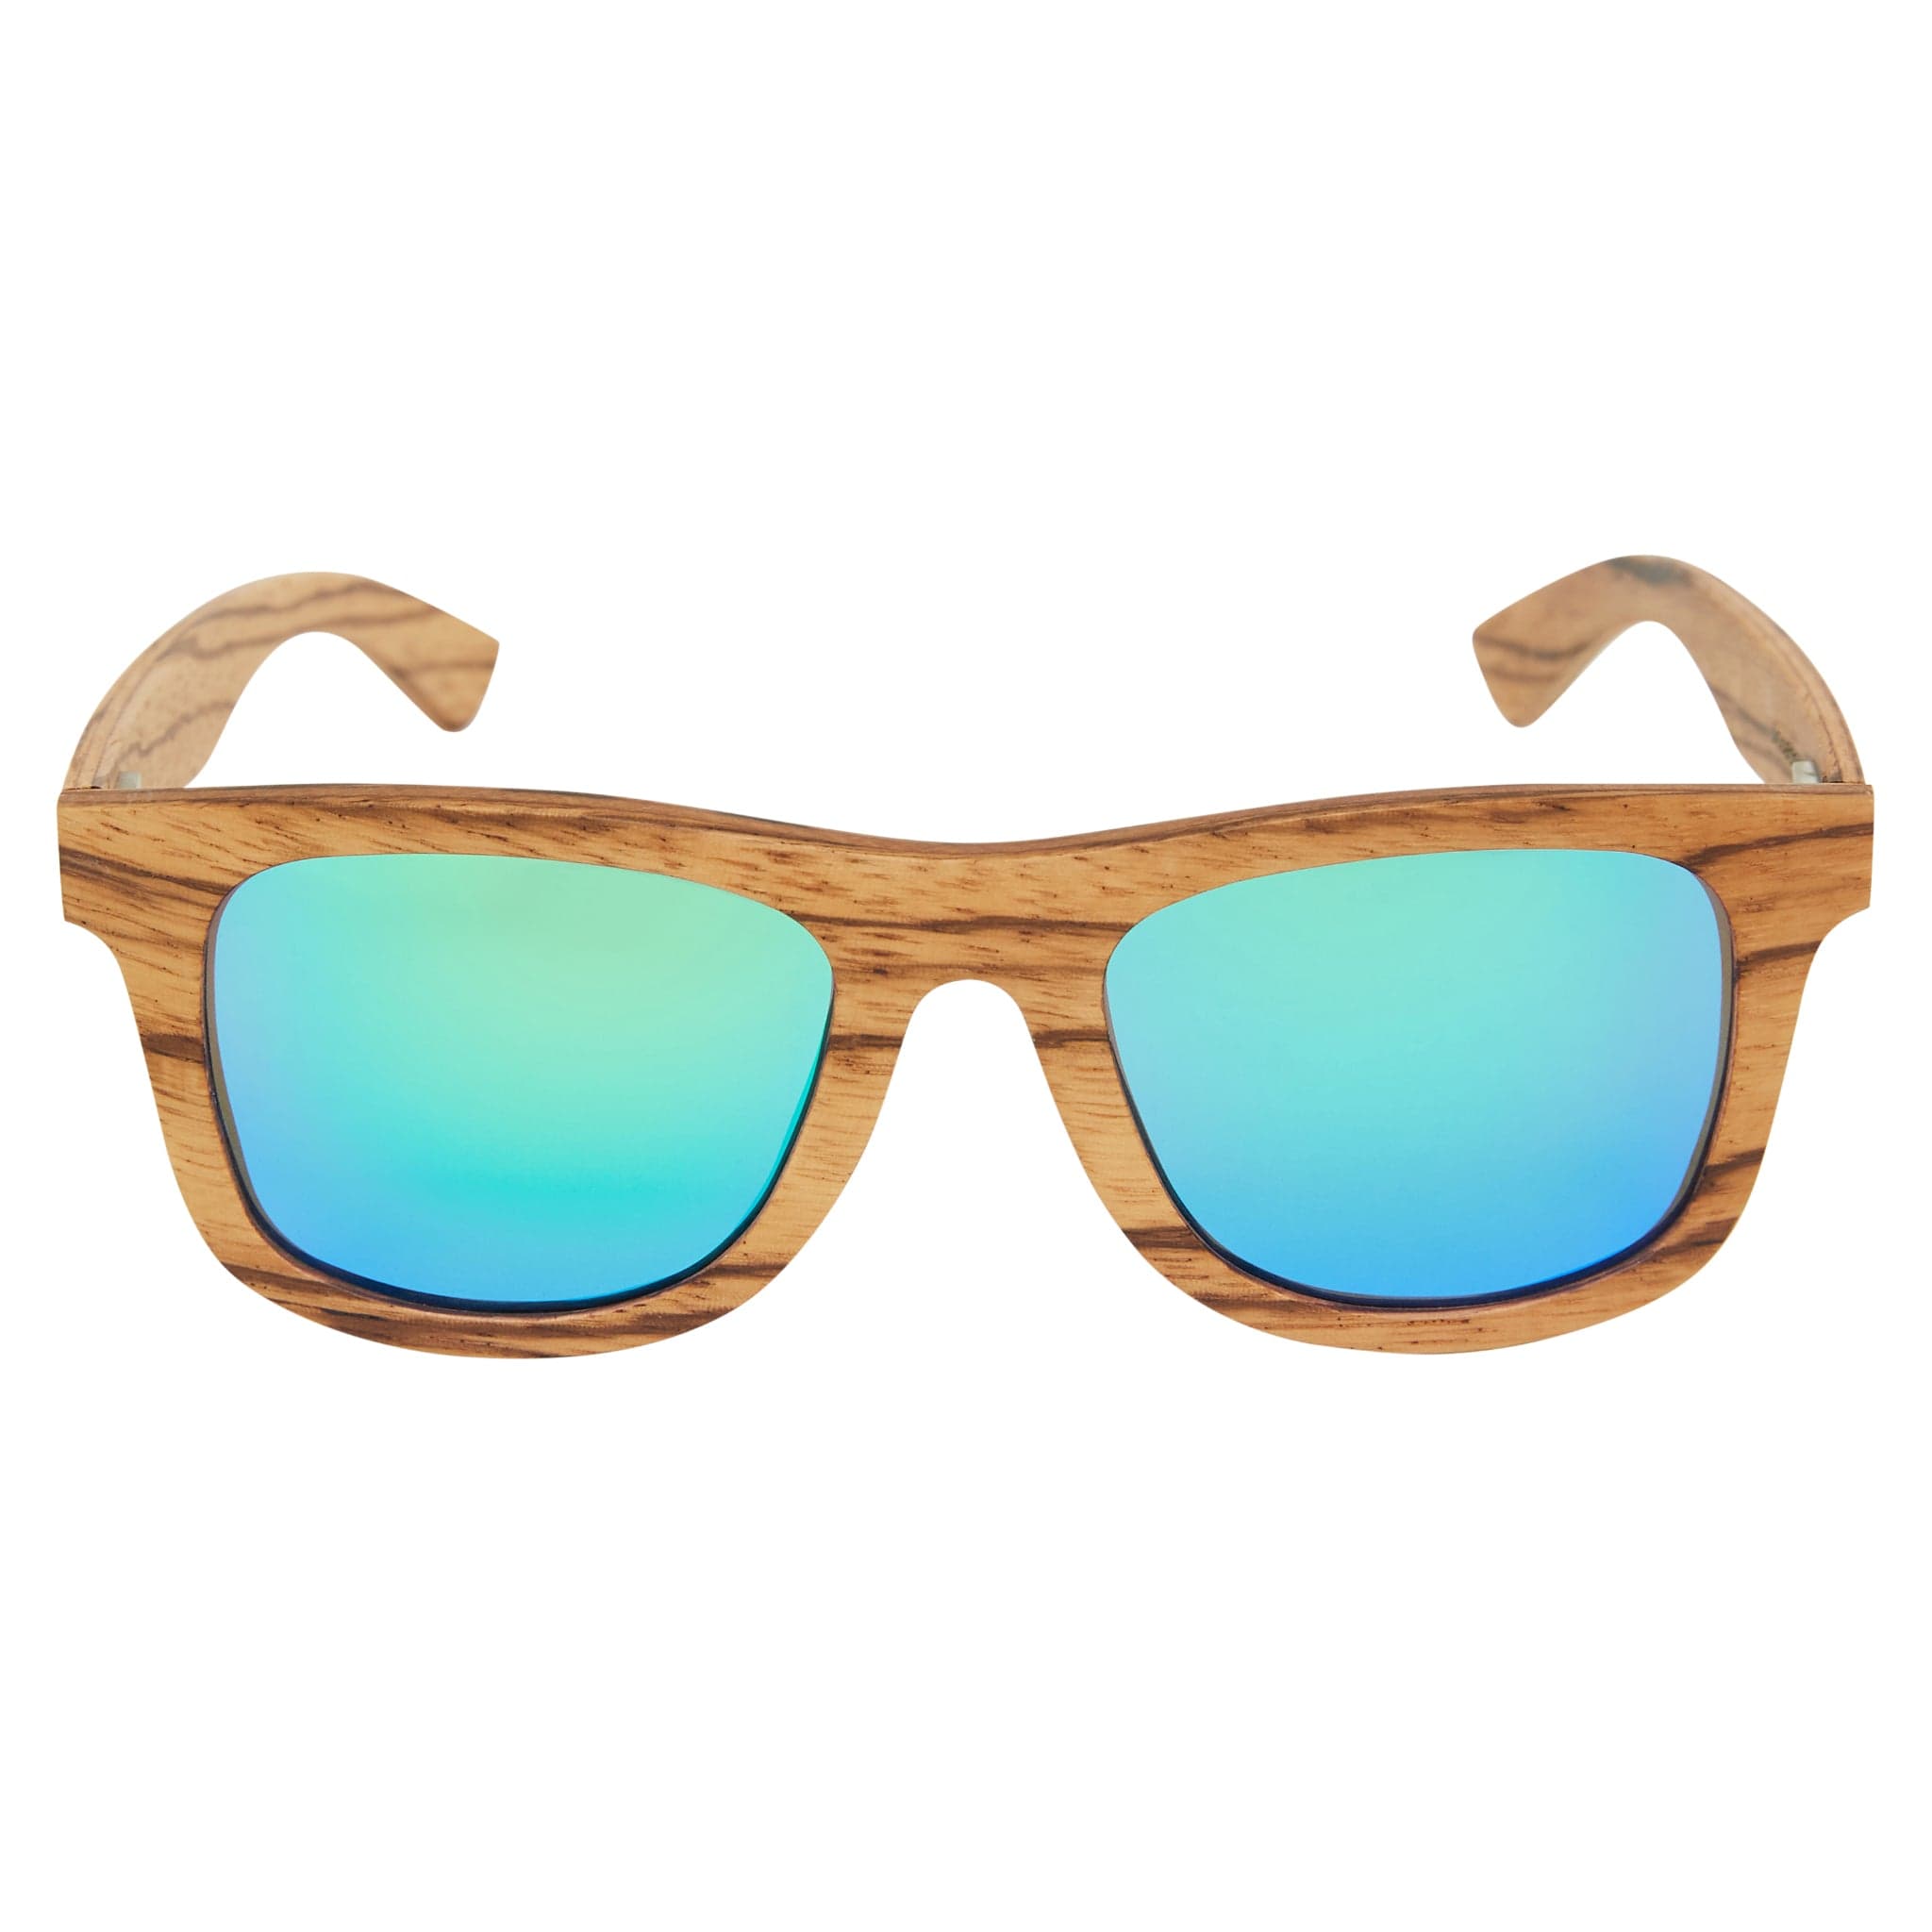 Wood Sunglasses, Recycled Skateboard wood